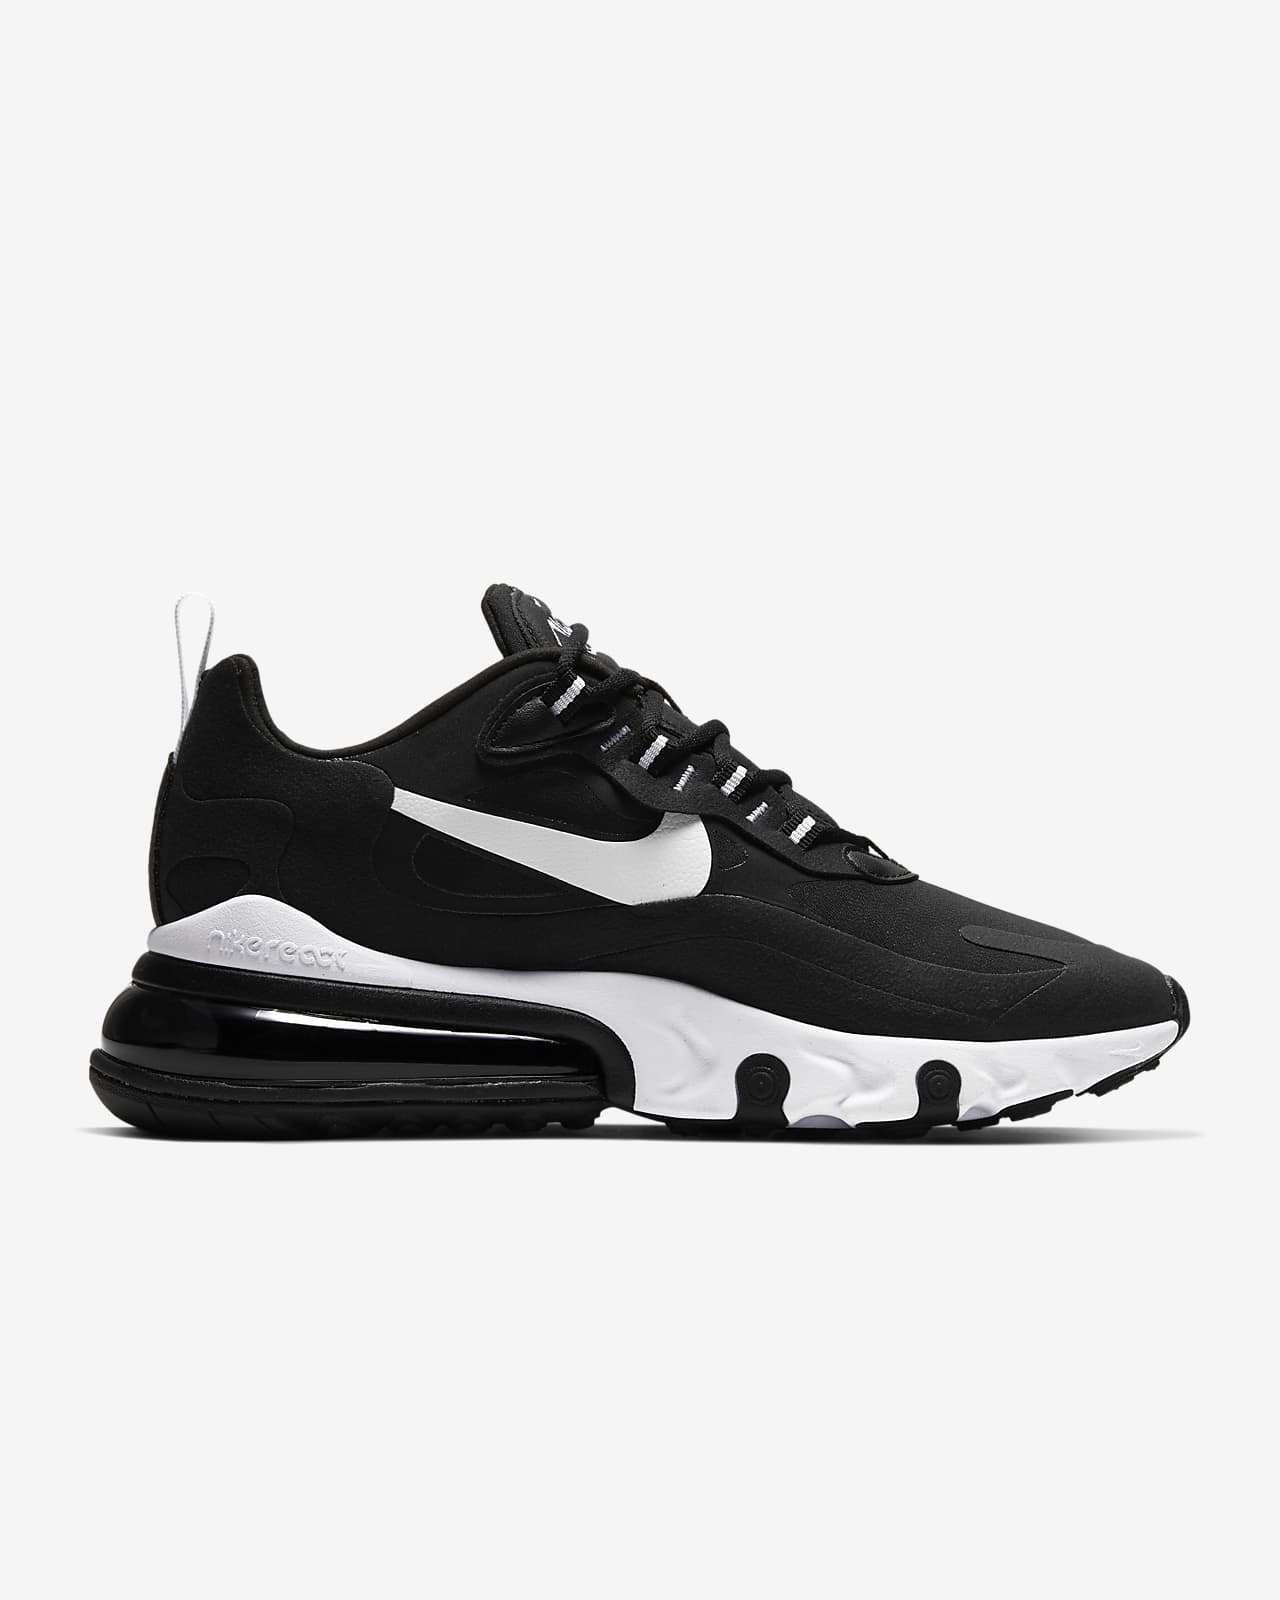 nike air max 270 react white and black sneakers